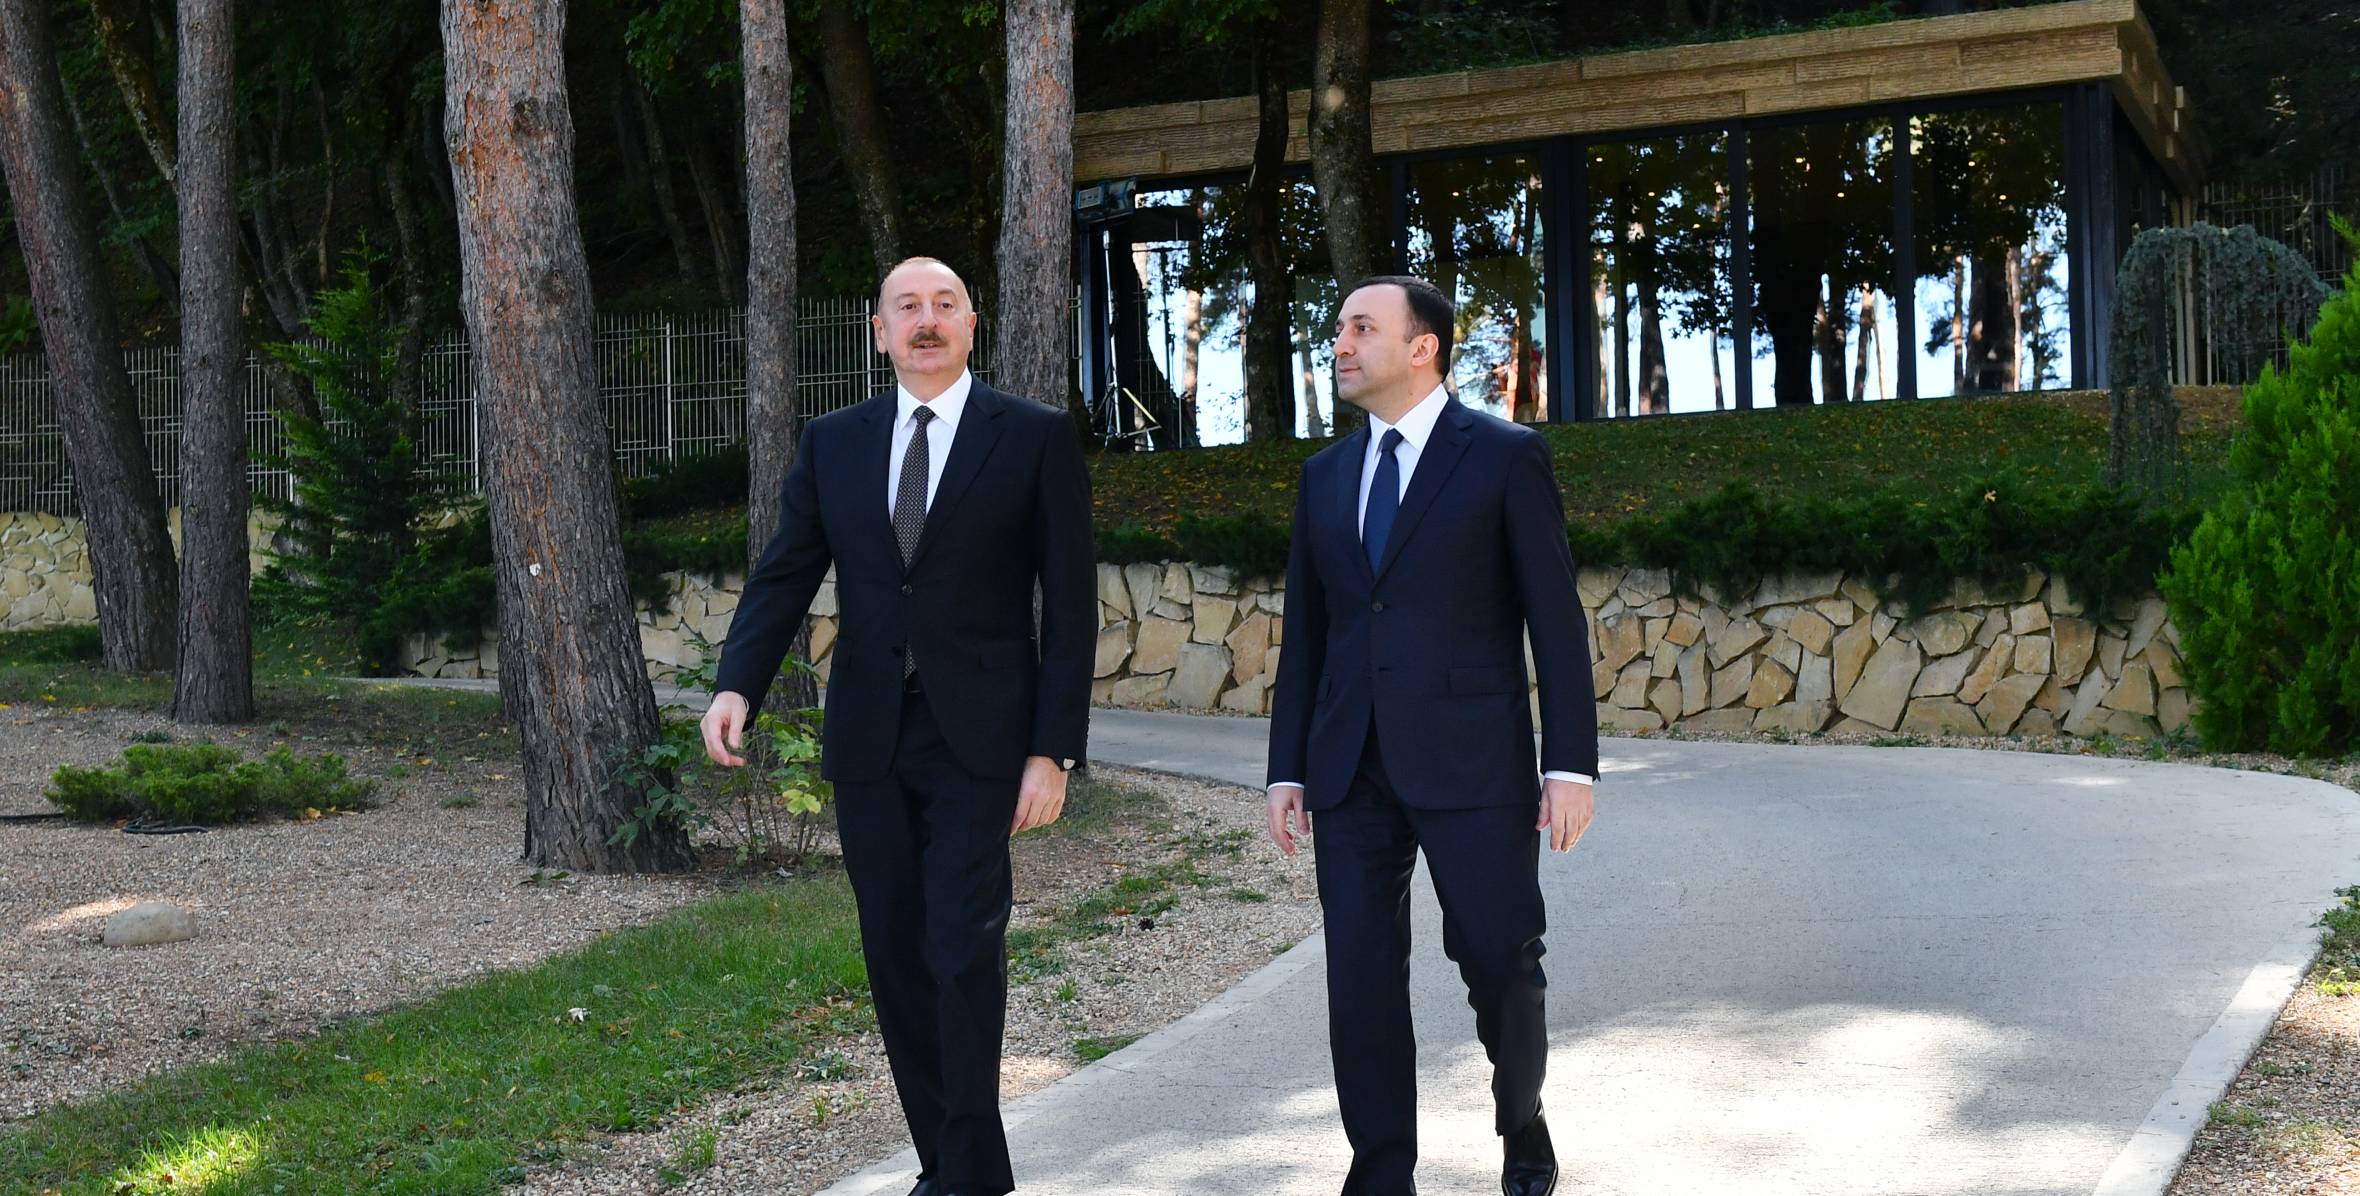 Ilham Aliyev and Prime Minister Irakli Garibashvili viewed photo exhibition dedicated to 100th anniversary of National Leader Heydar Aliyev in Tbilisi